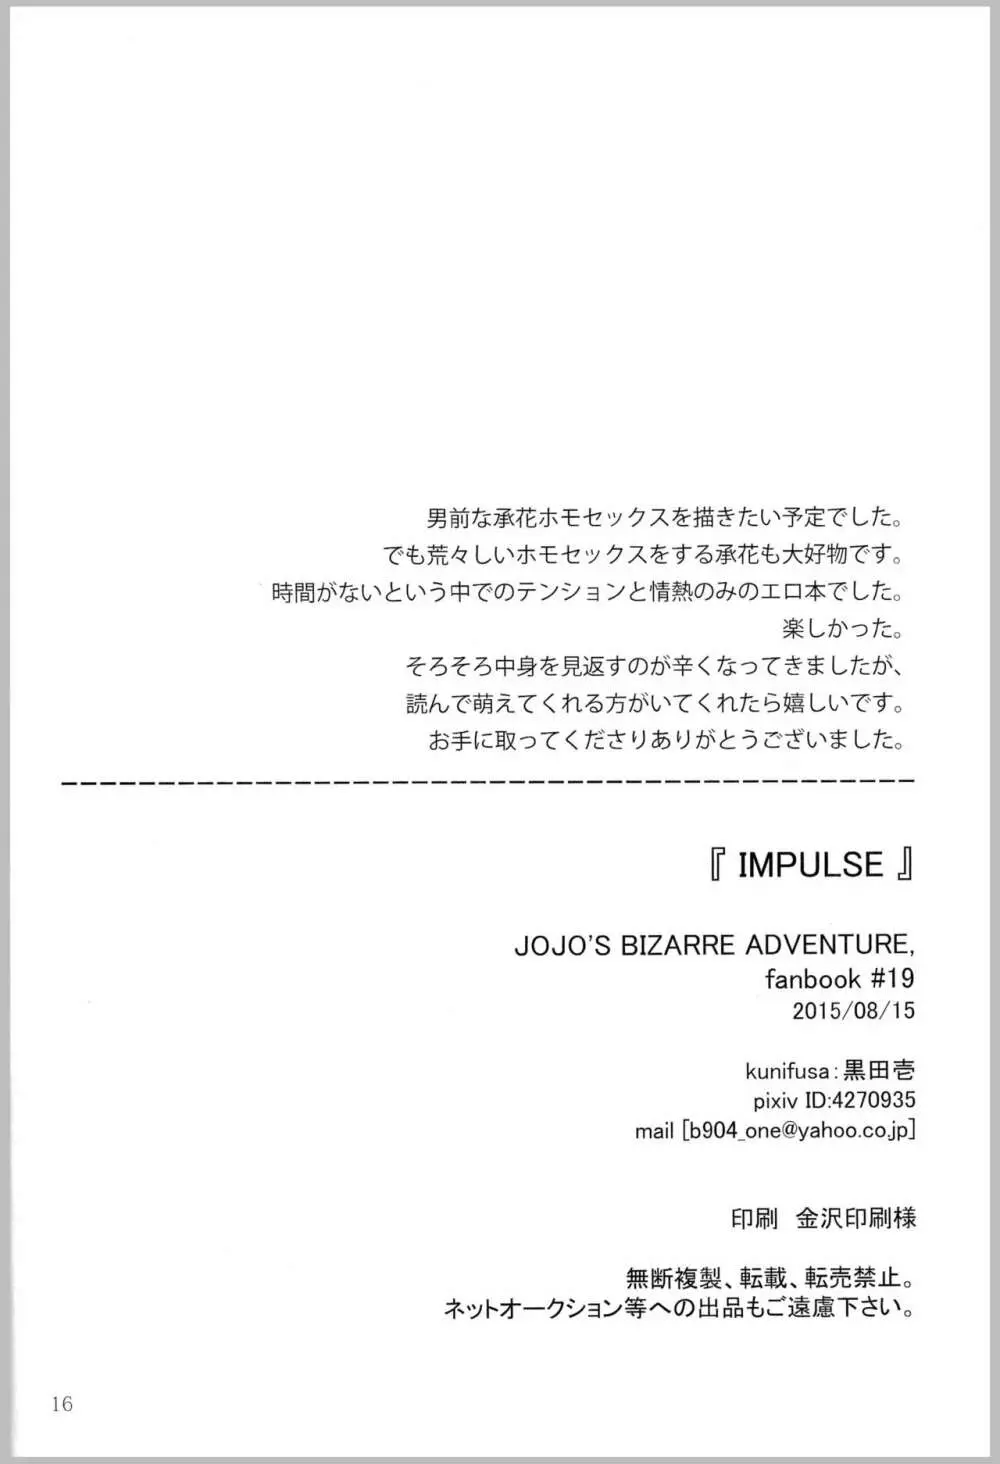 IMPULSE - page16